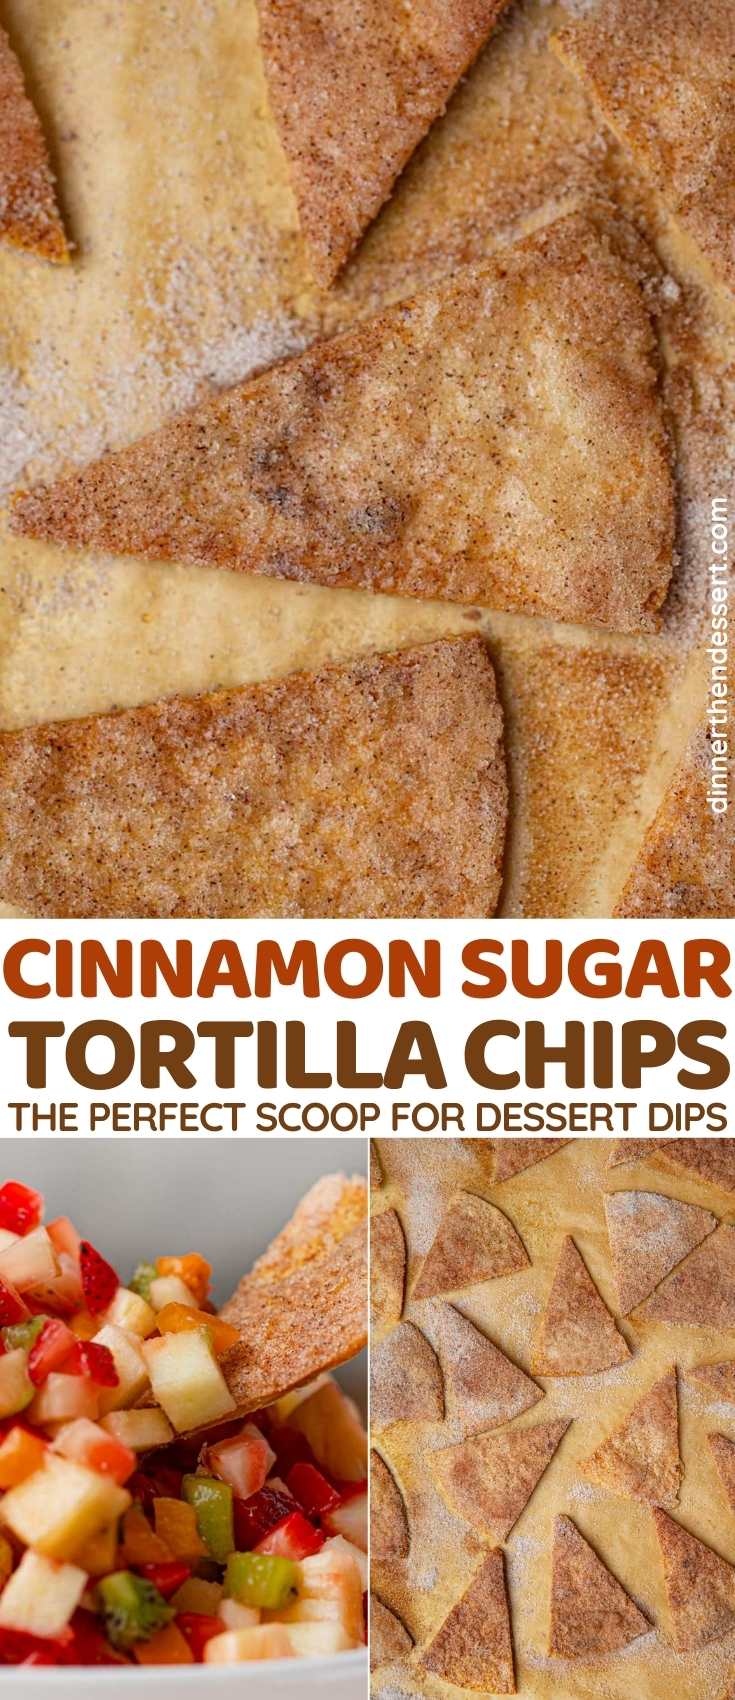 Cinnamon Sugar Tortilla Chips collage